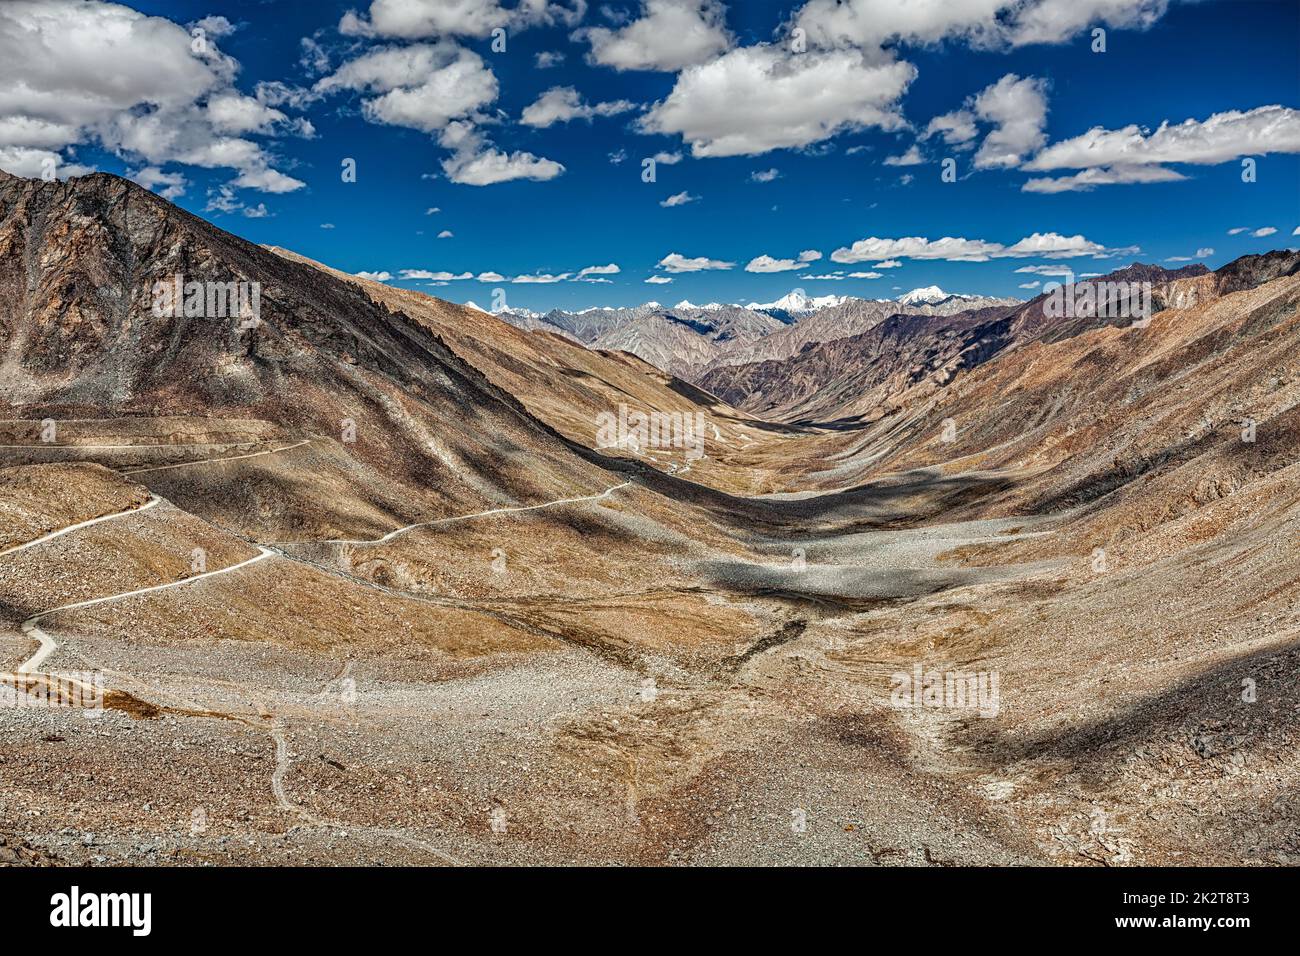 Karakoram Range and road in valley, Ladakh, India Stock Photo